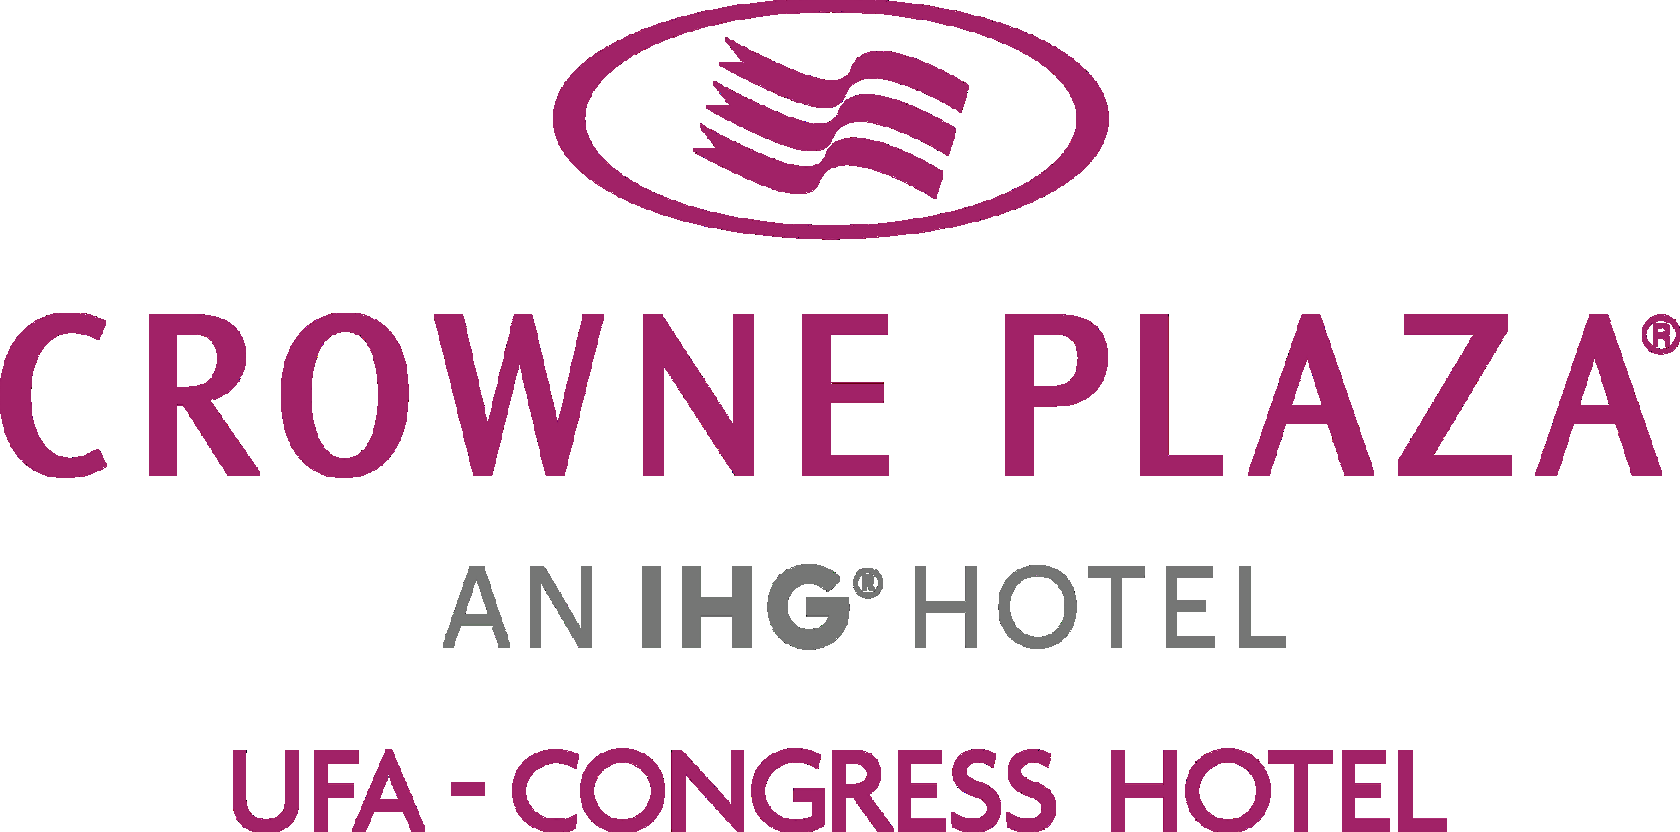 Crowne Plaza Ufa – Congress Hotel